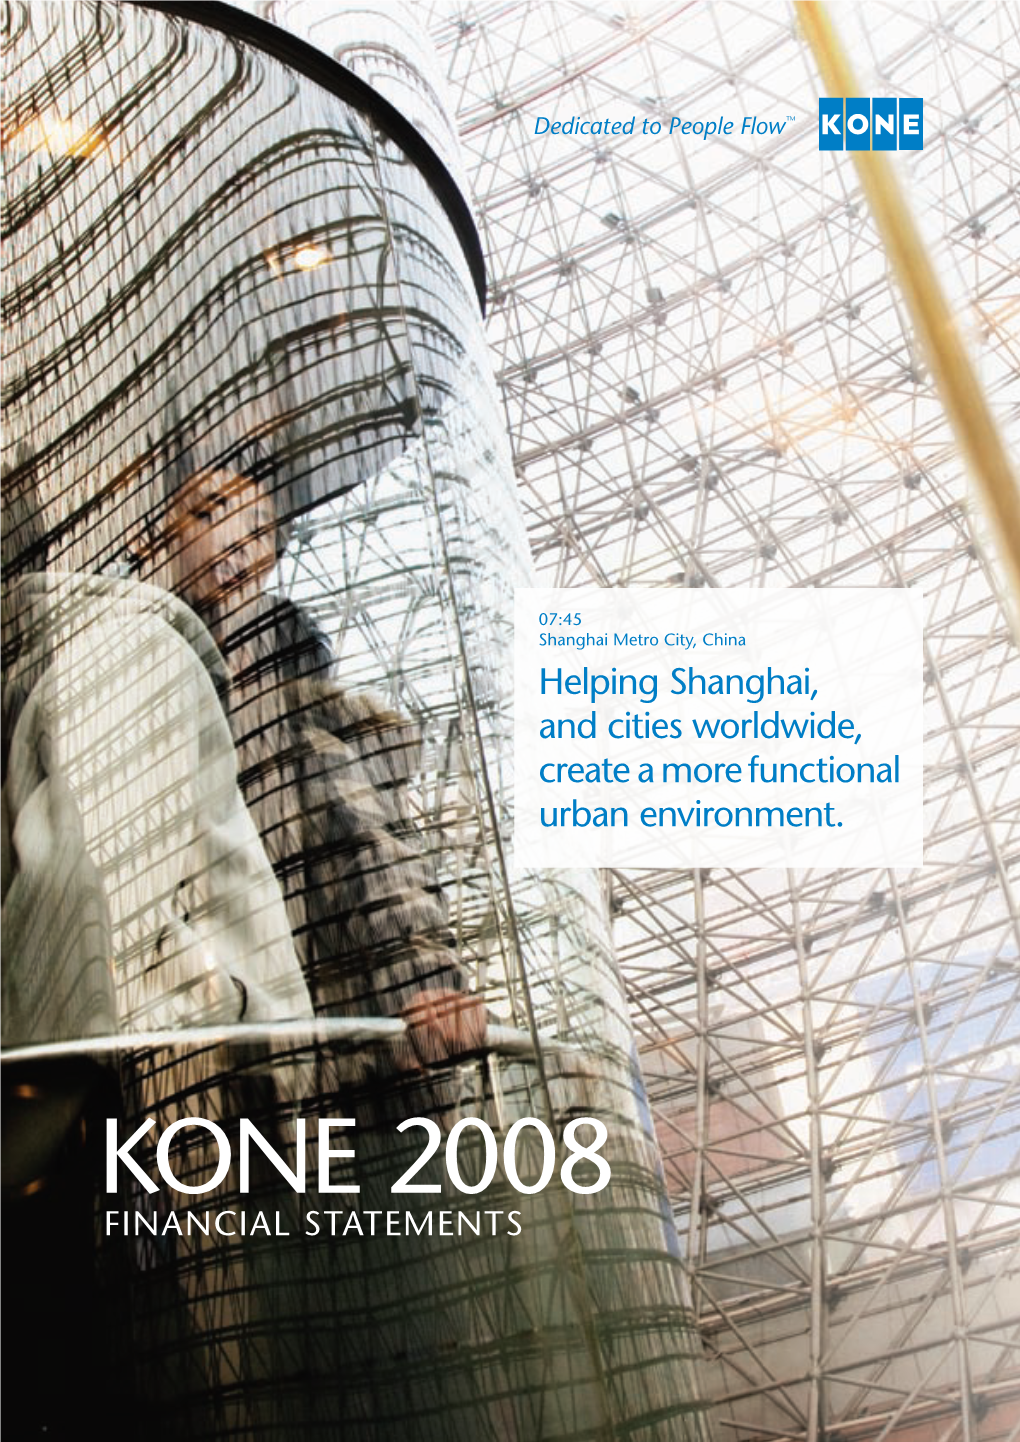 Kone 2008 Financial Statements Information for Shareholders